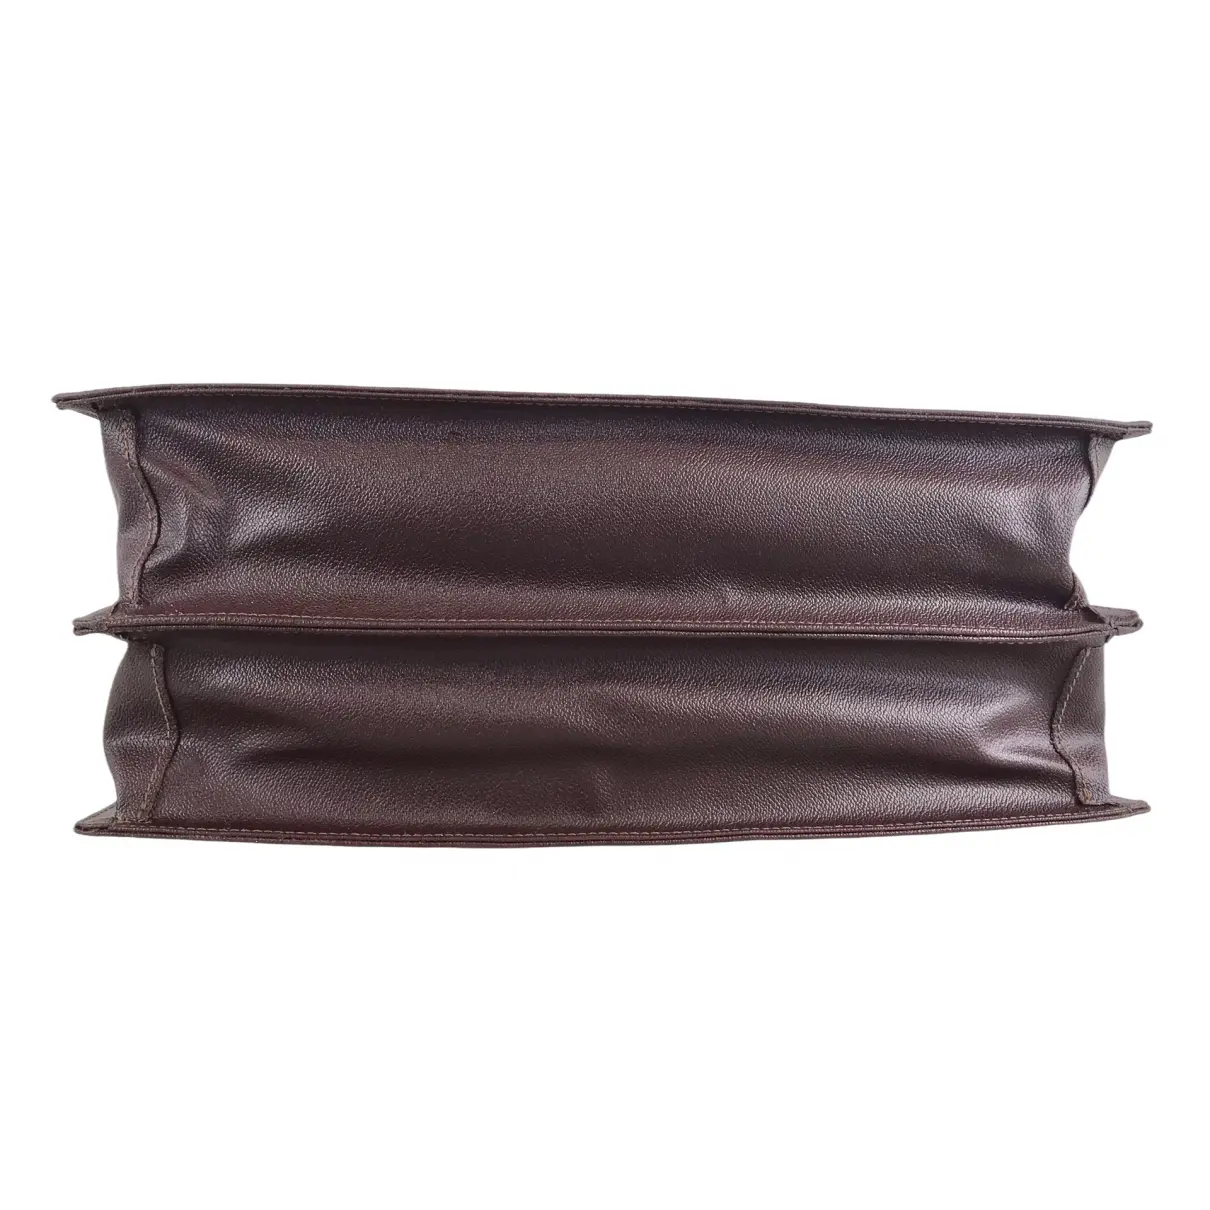 Buy Trussardi Leather satchel online